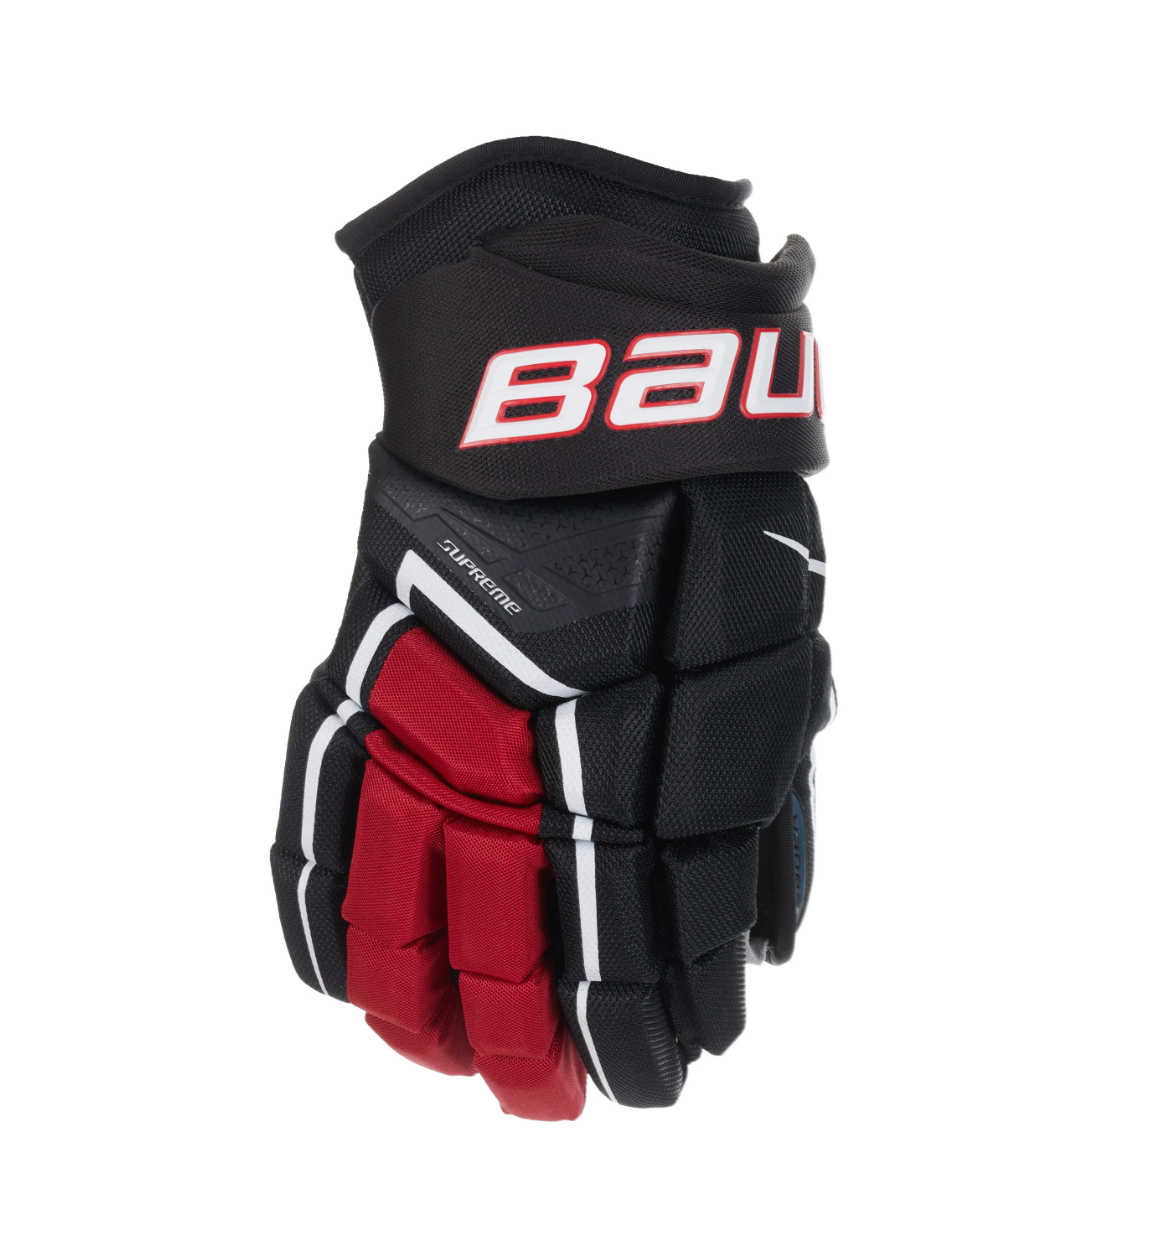 Bauer Supreme Ultrasonic Hockey Gloves - Junior